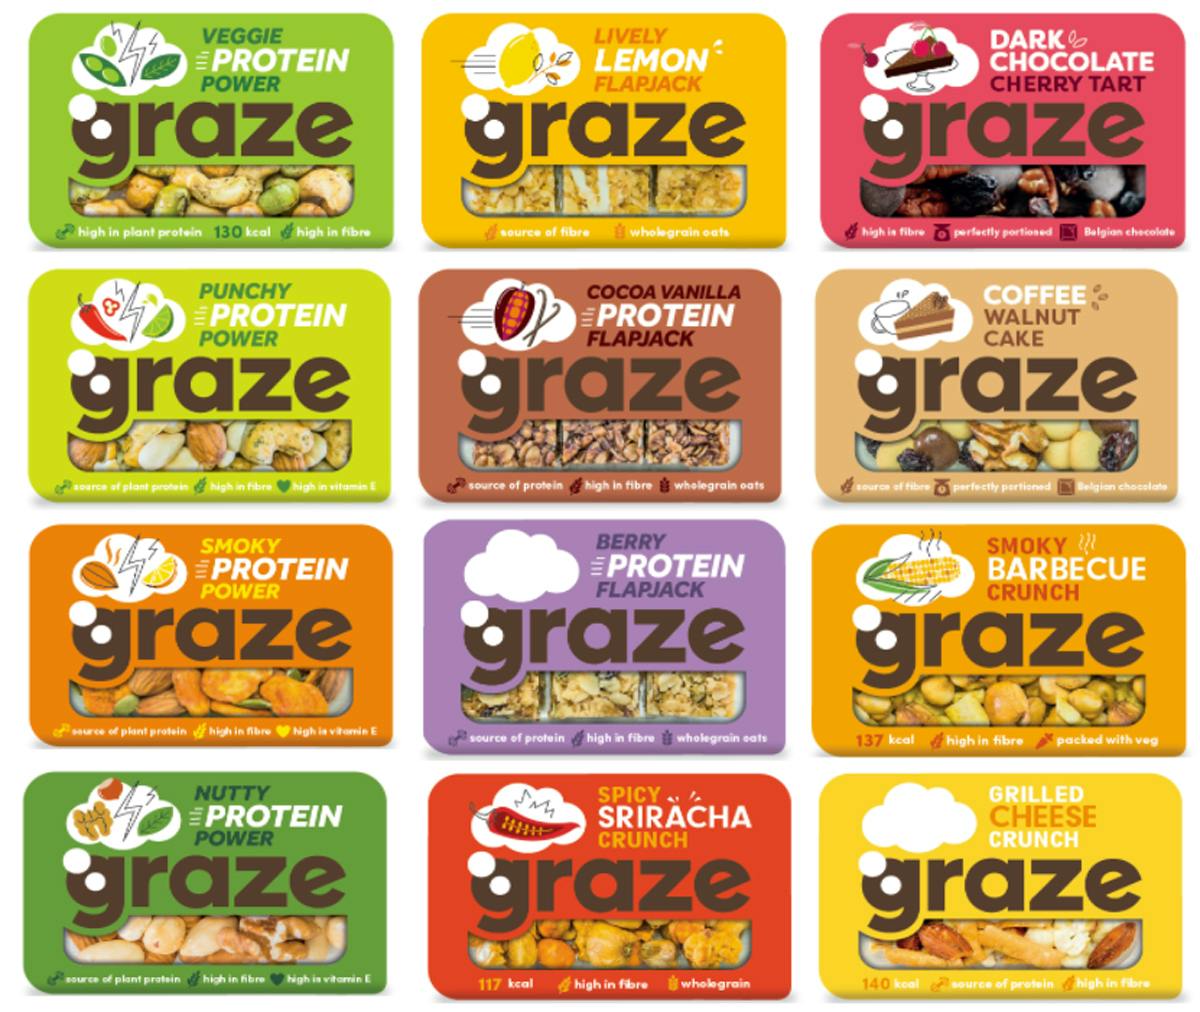 Graze healthy snacking brand, Unilever